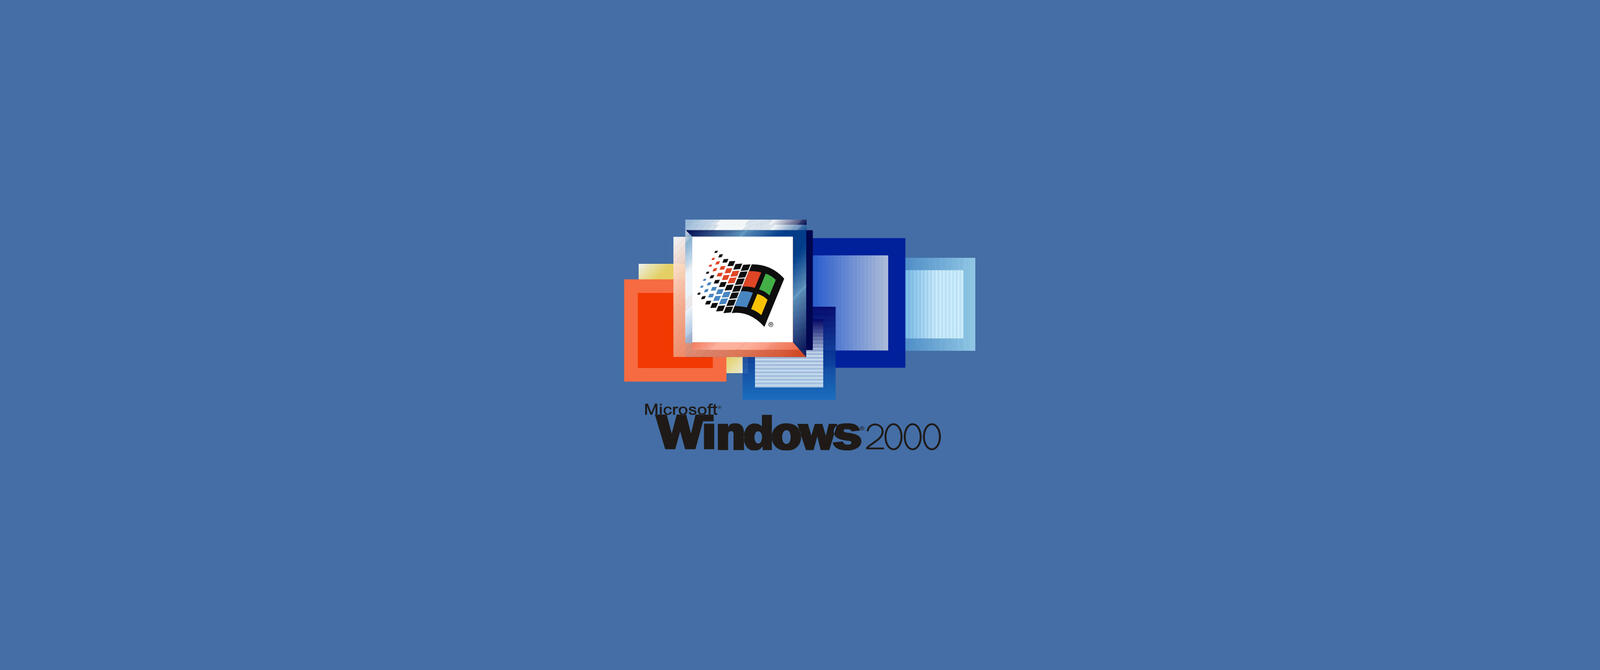 Wallpapers Windows Microsoft minimalism on the desktop